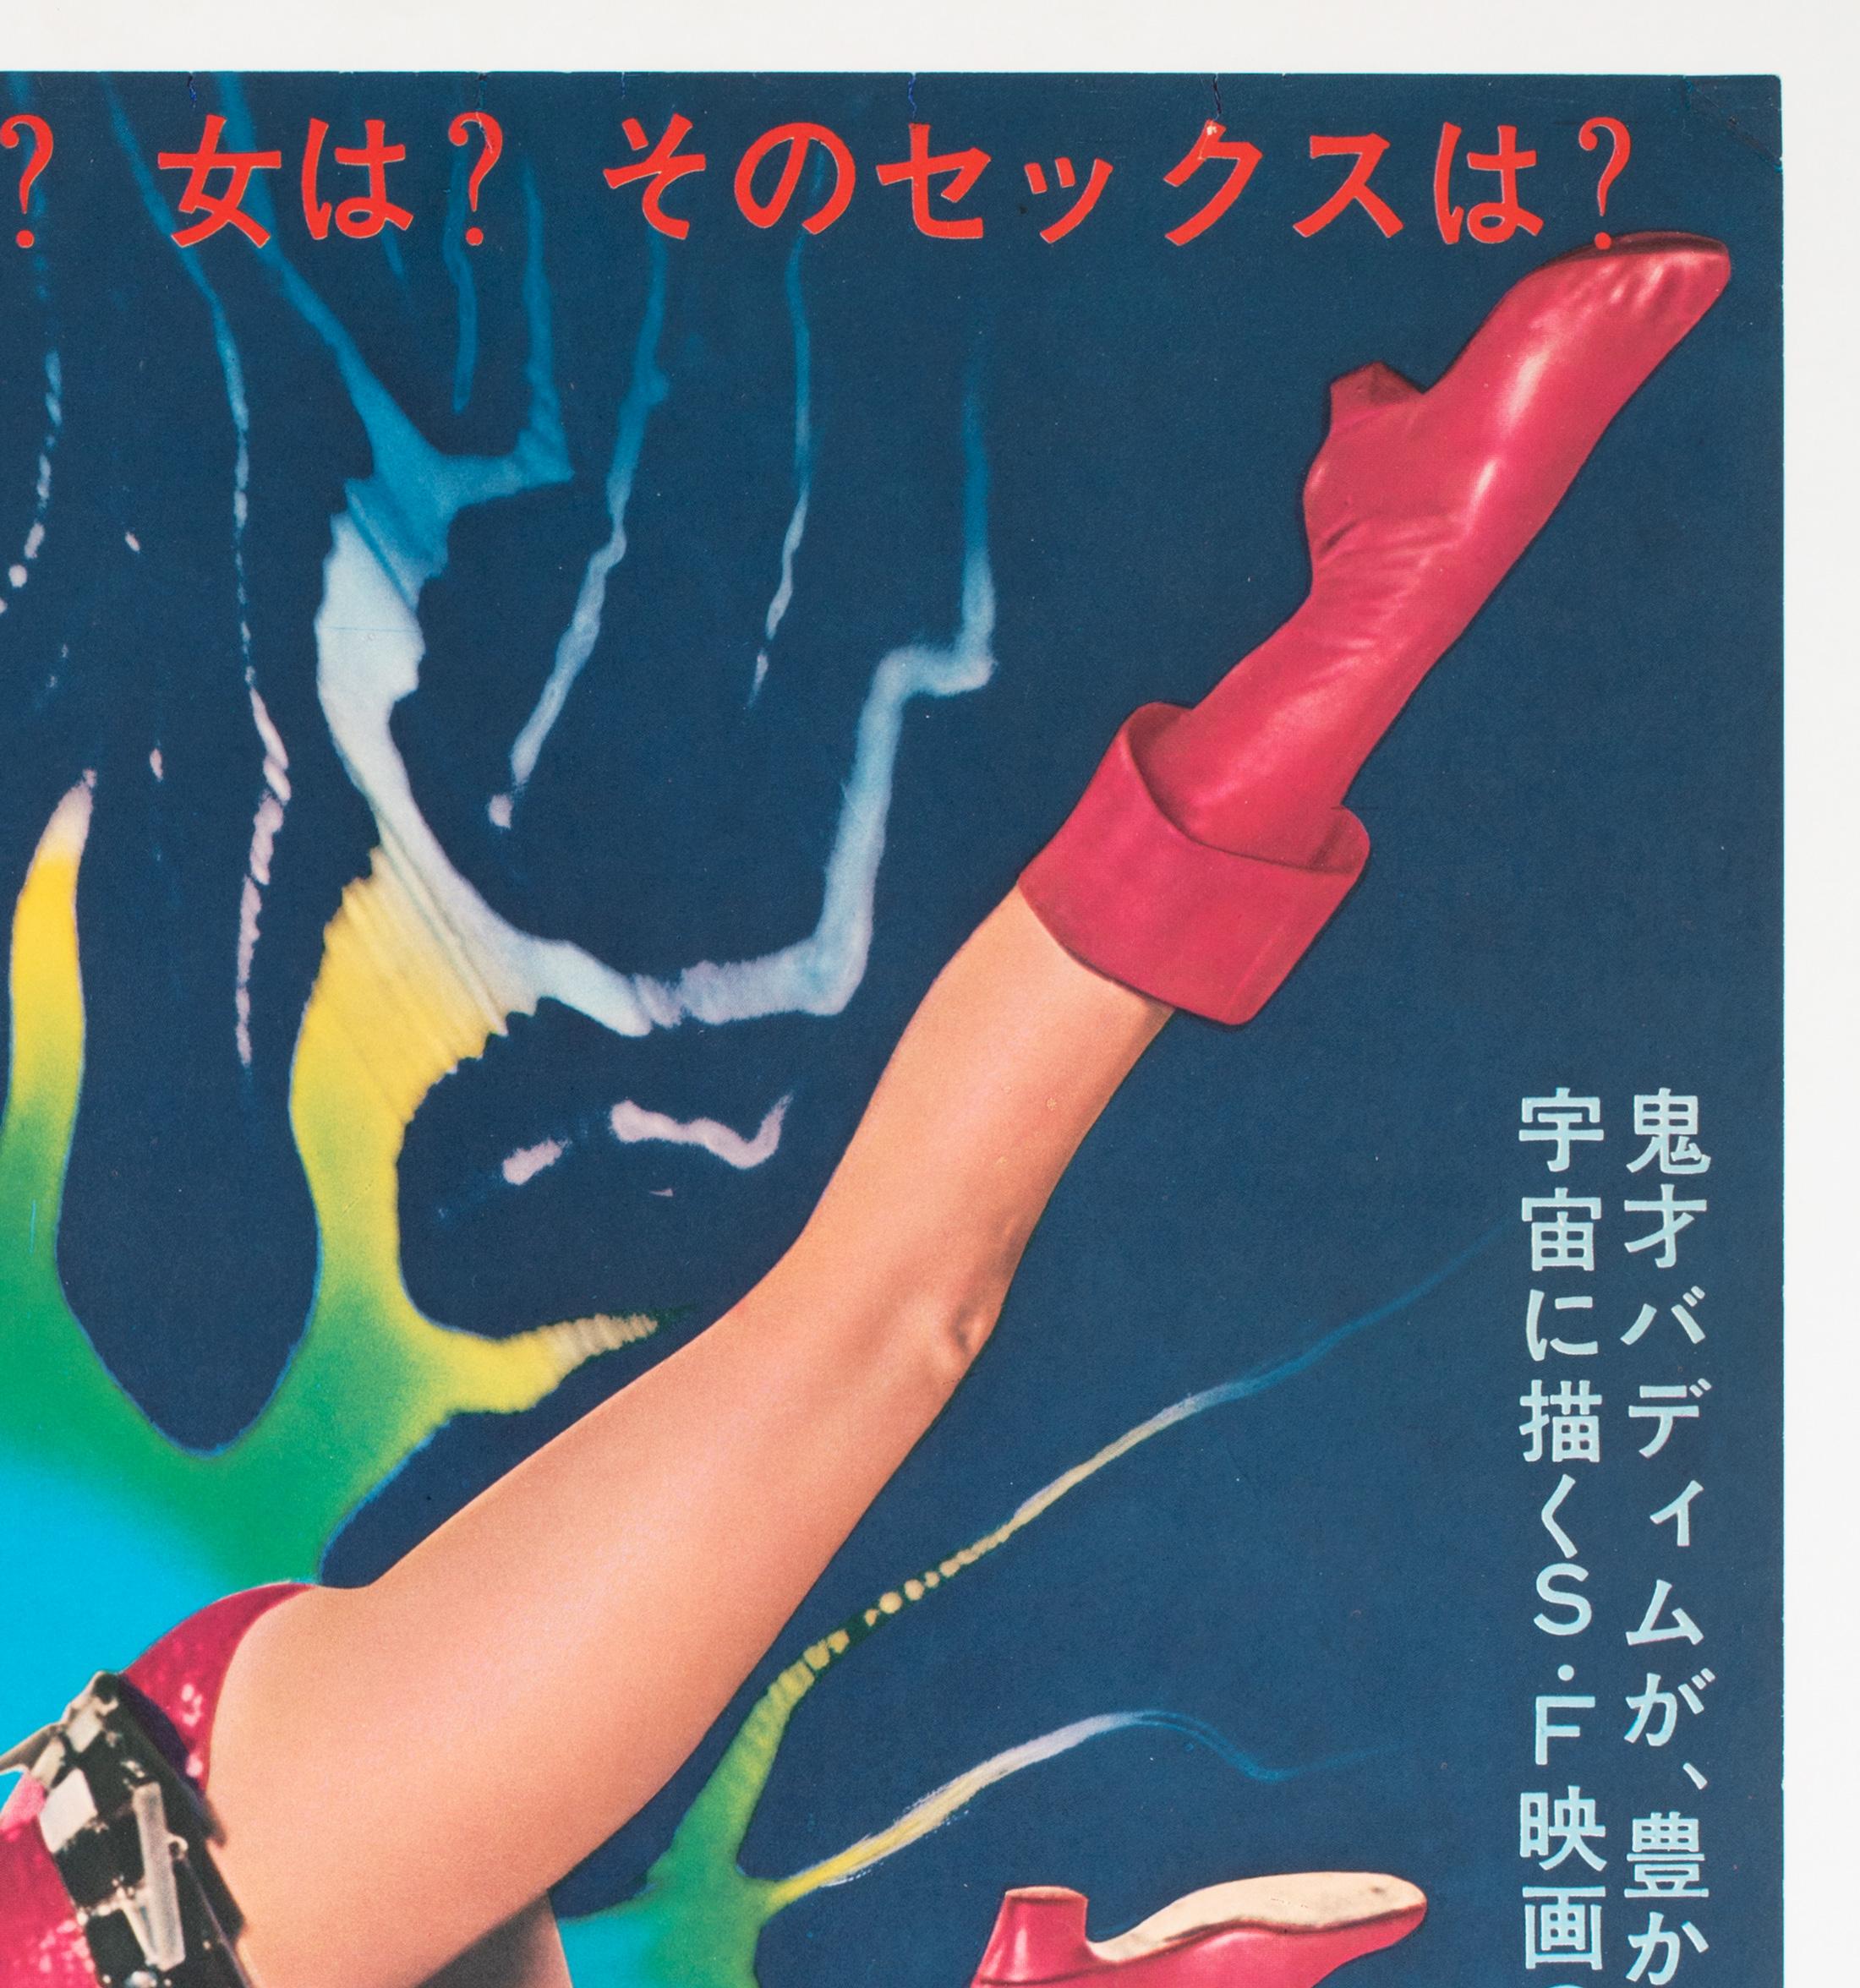 barbarella japanese poster